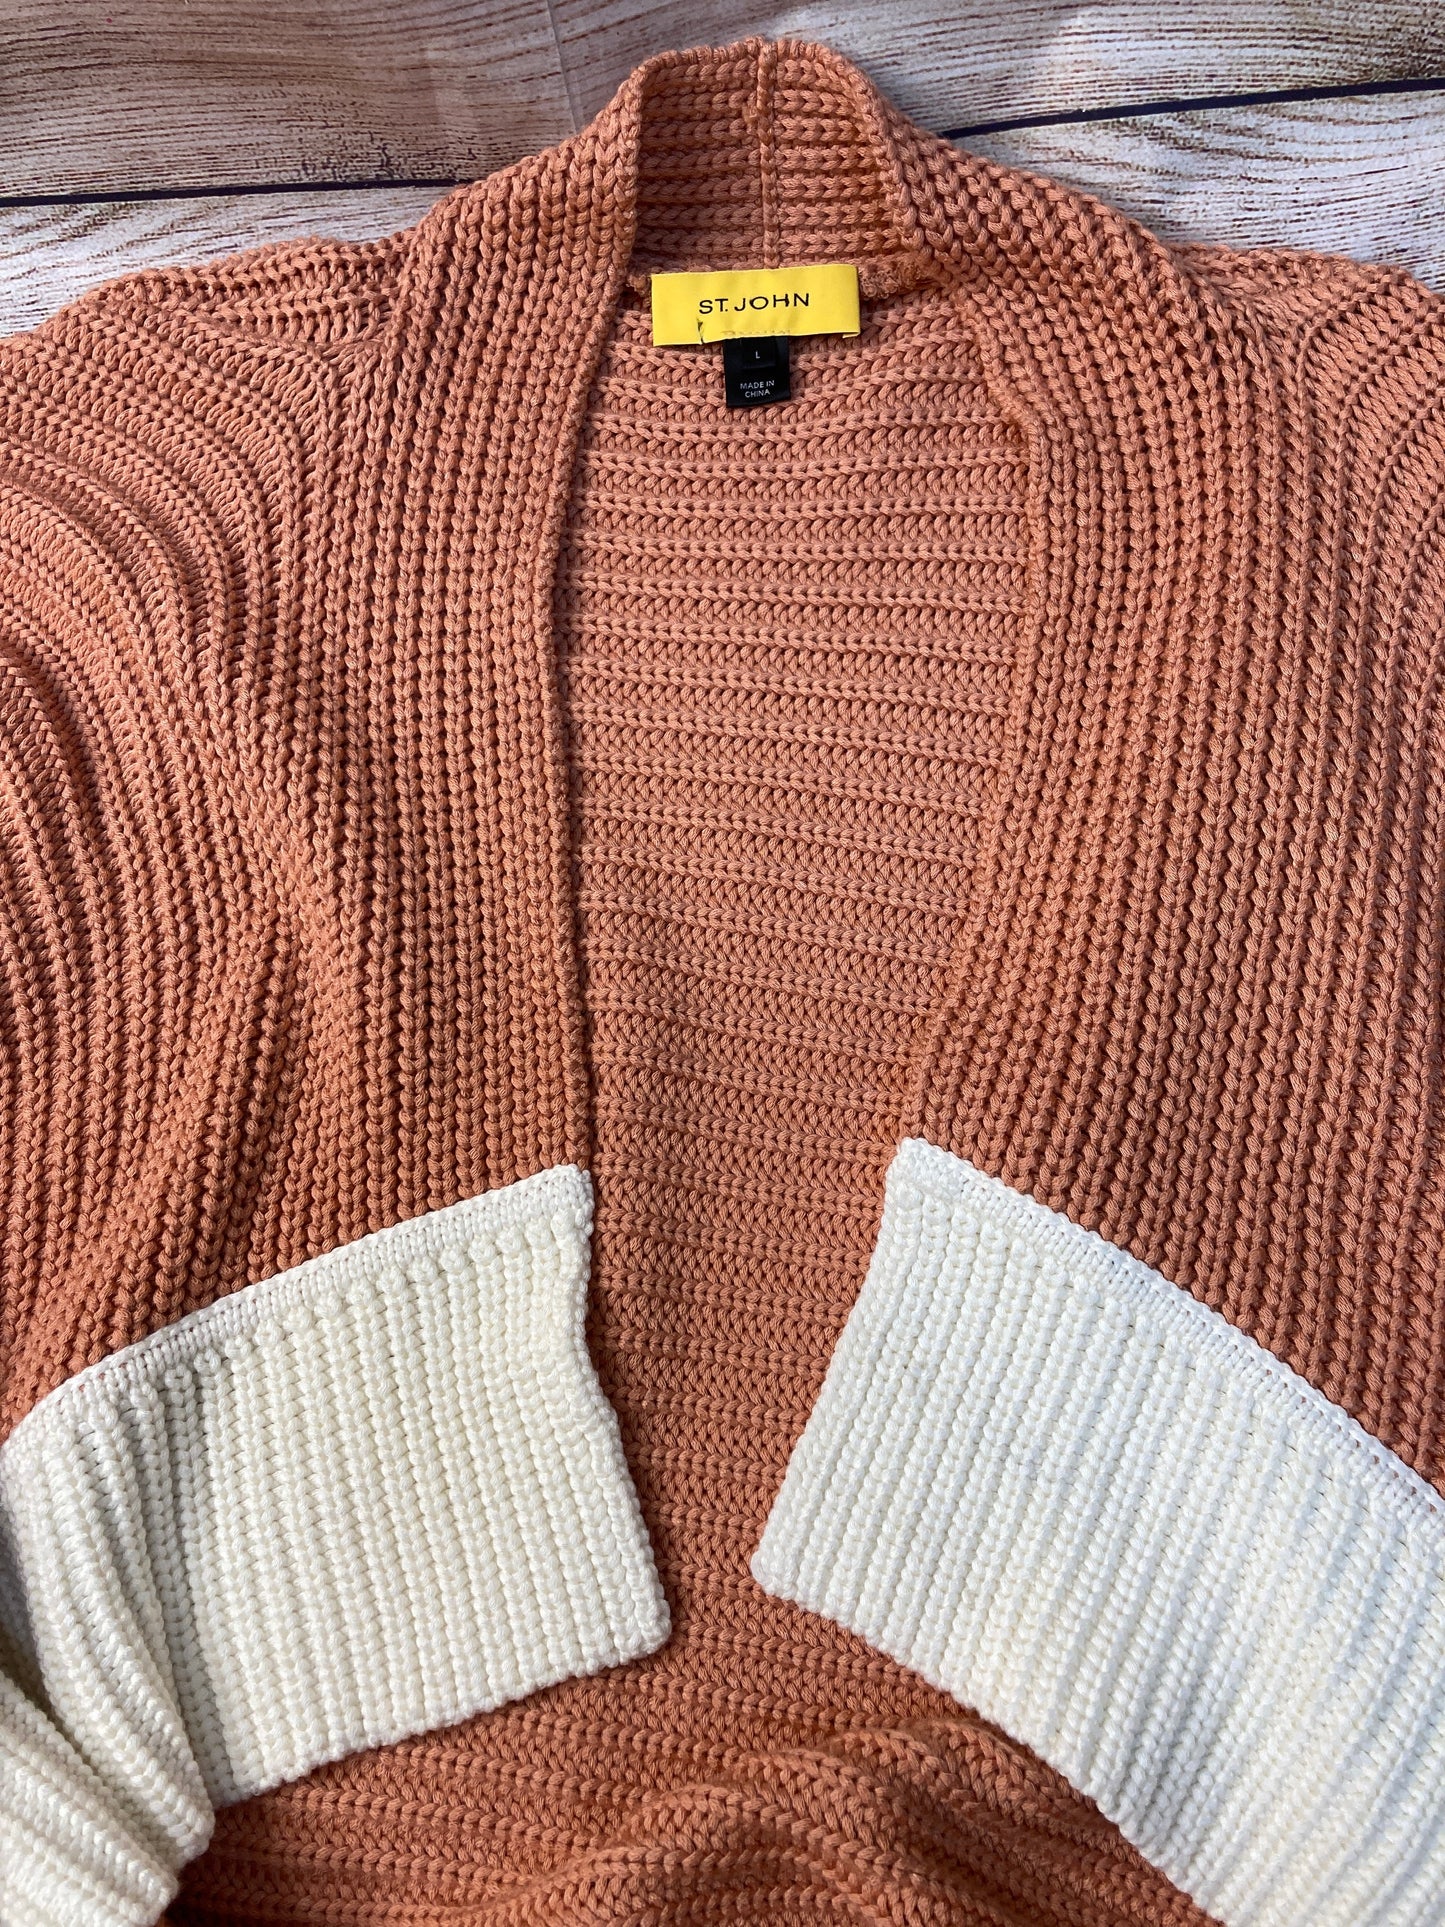 Sweater Cardigan Designer By St John Knits  Size: L